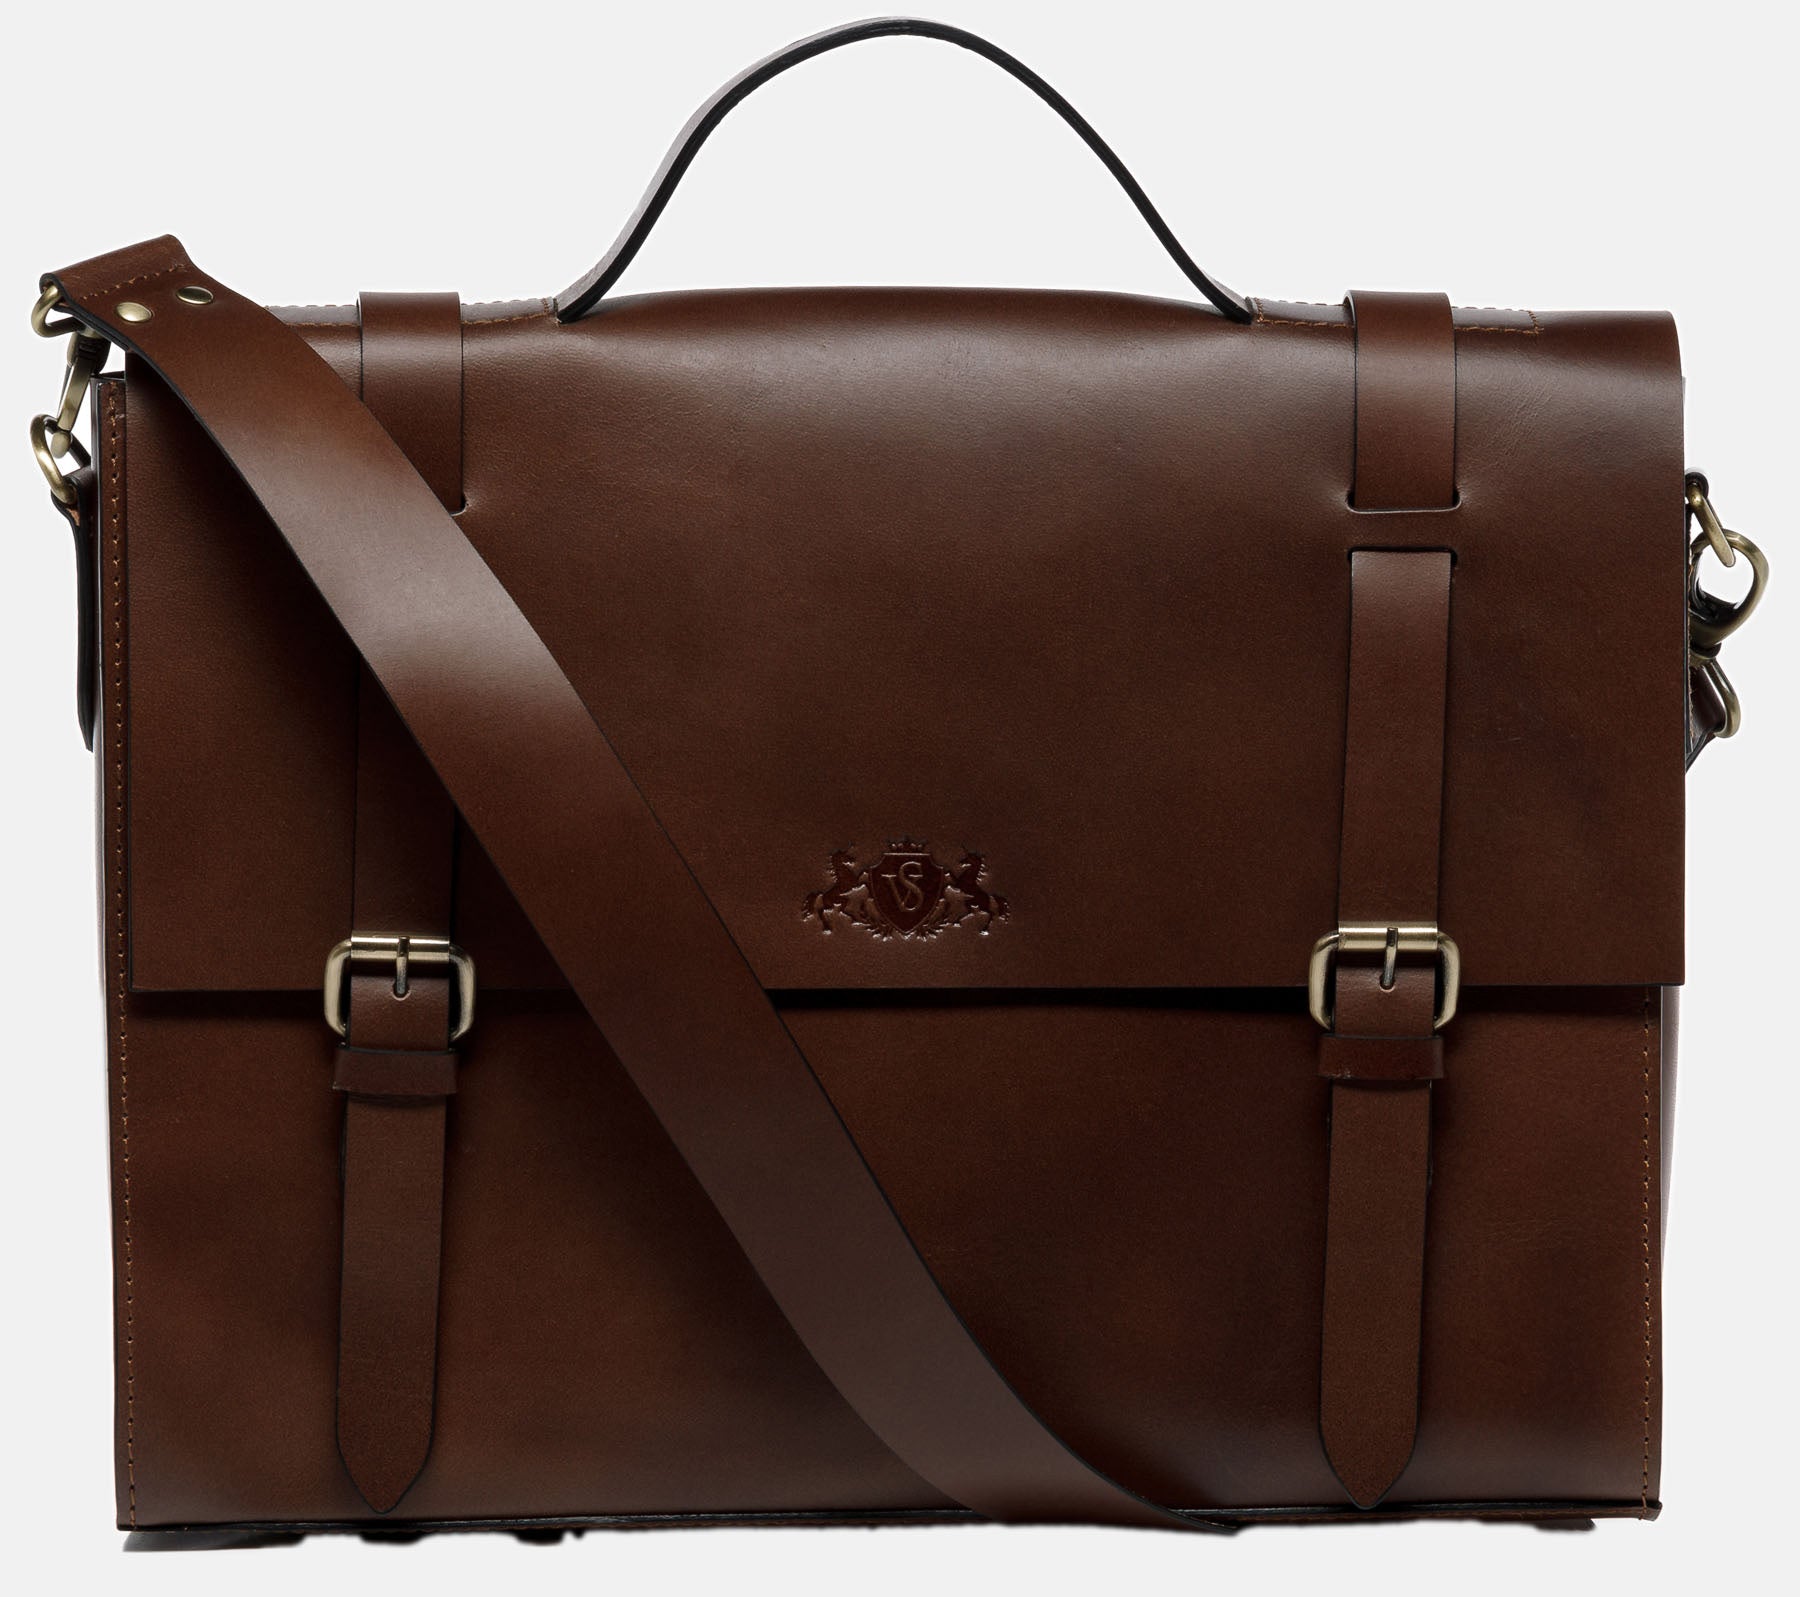 Briefcase BOSTON saddle leather brown